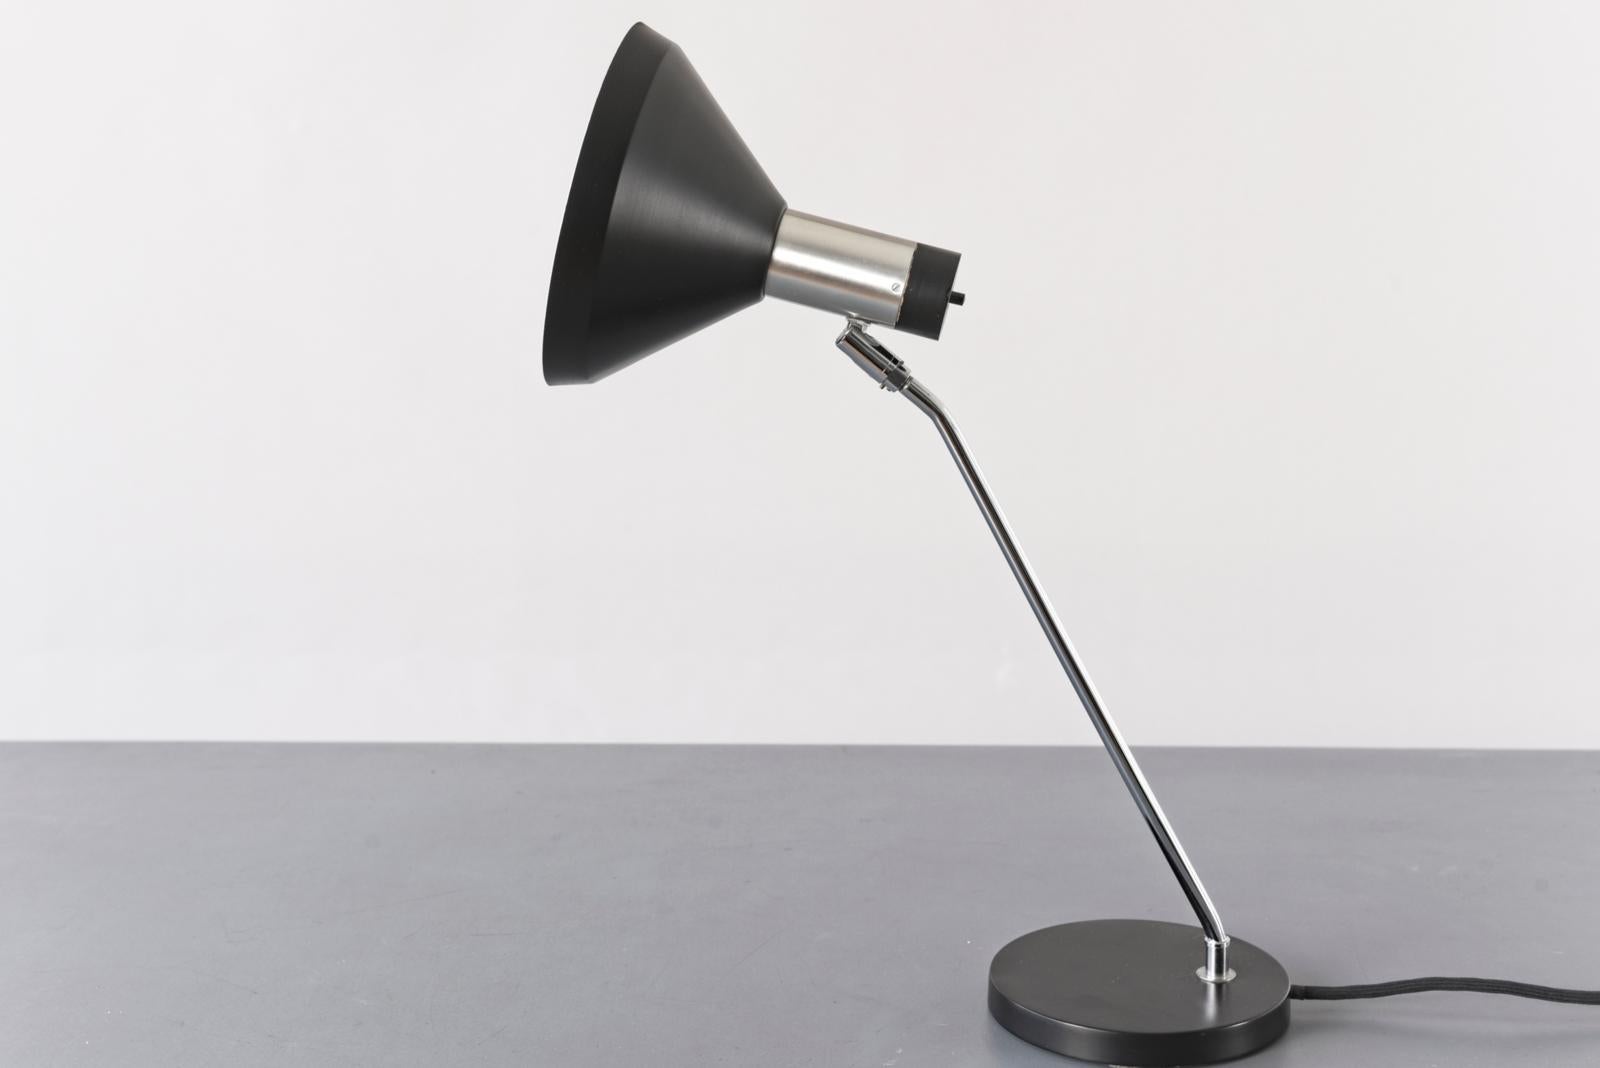 Mid-20th Century Table Lamp attr. to Rico und Rosemarie Baltensweiler, Switzerland - 1960 For Sale